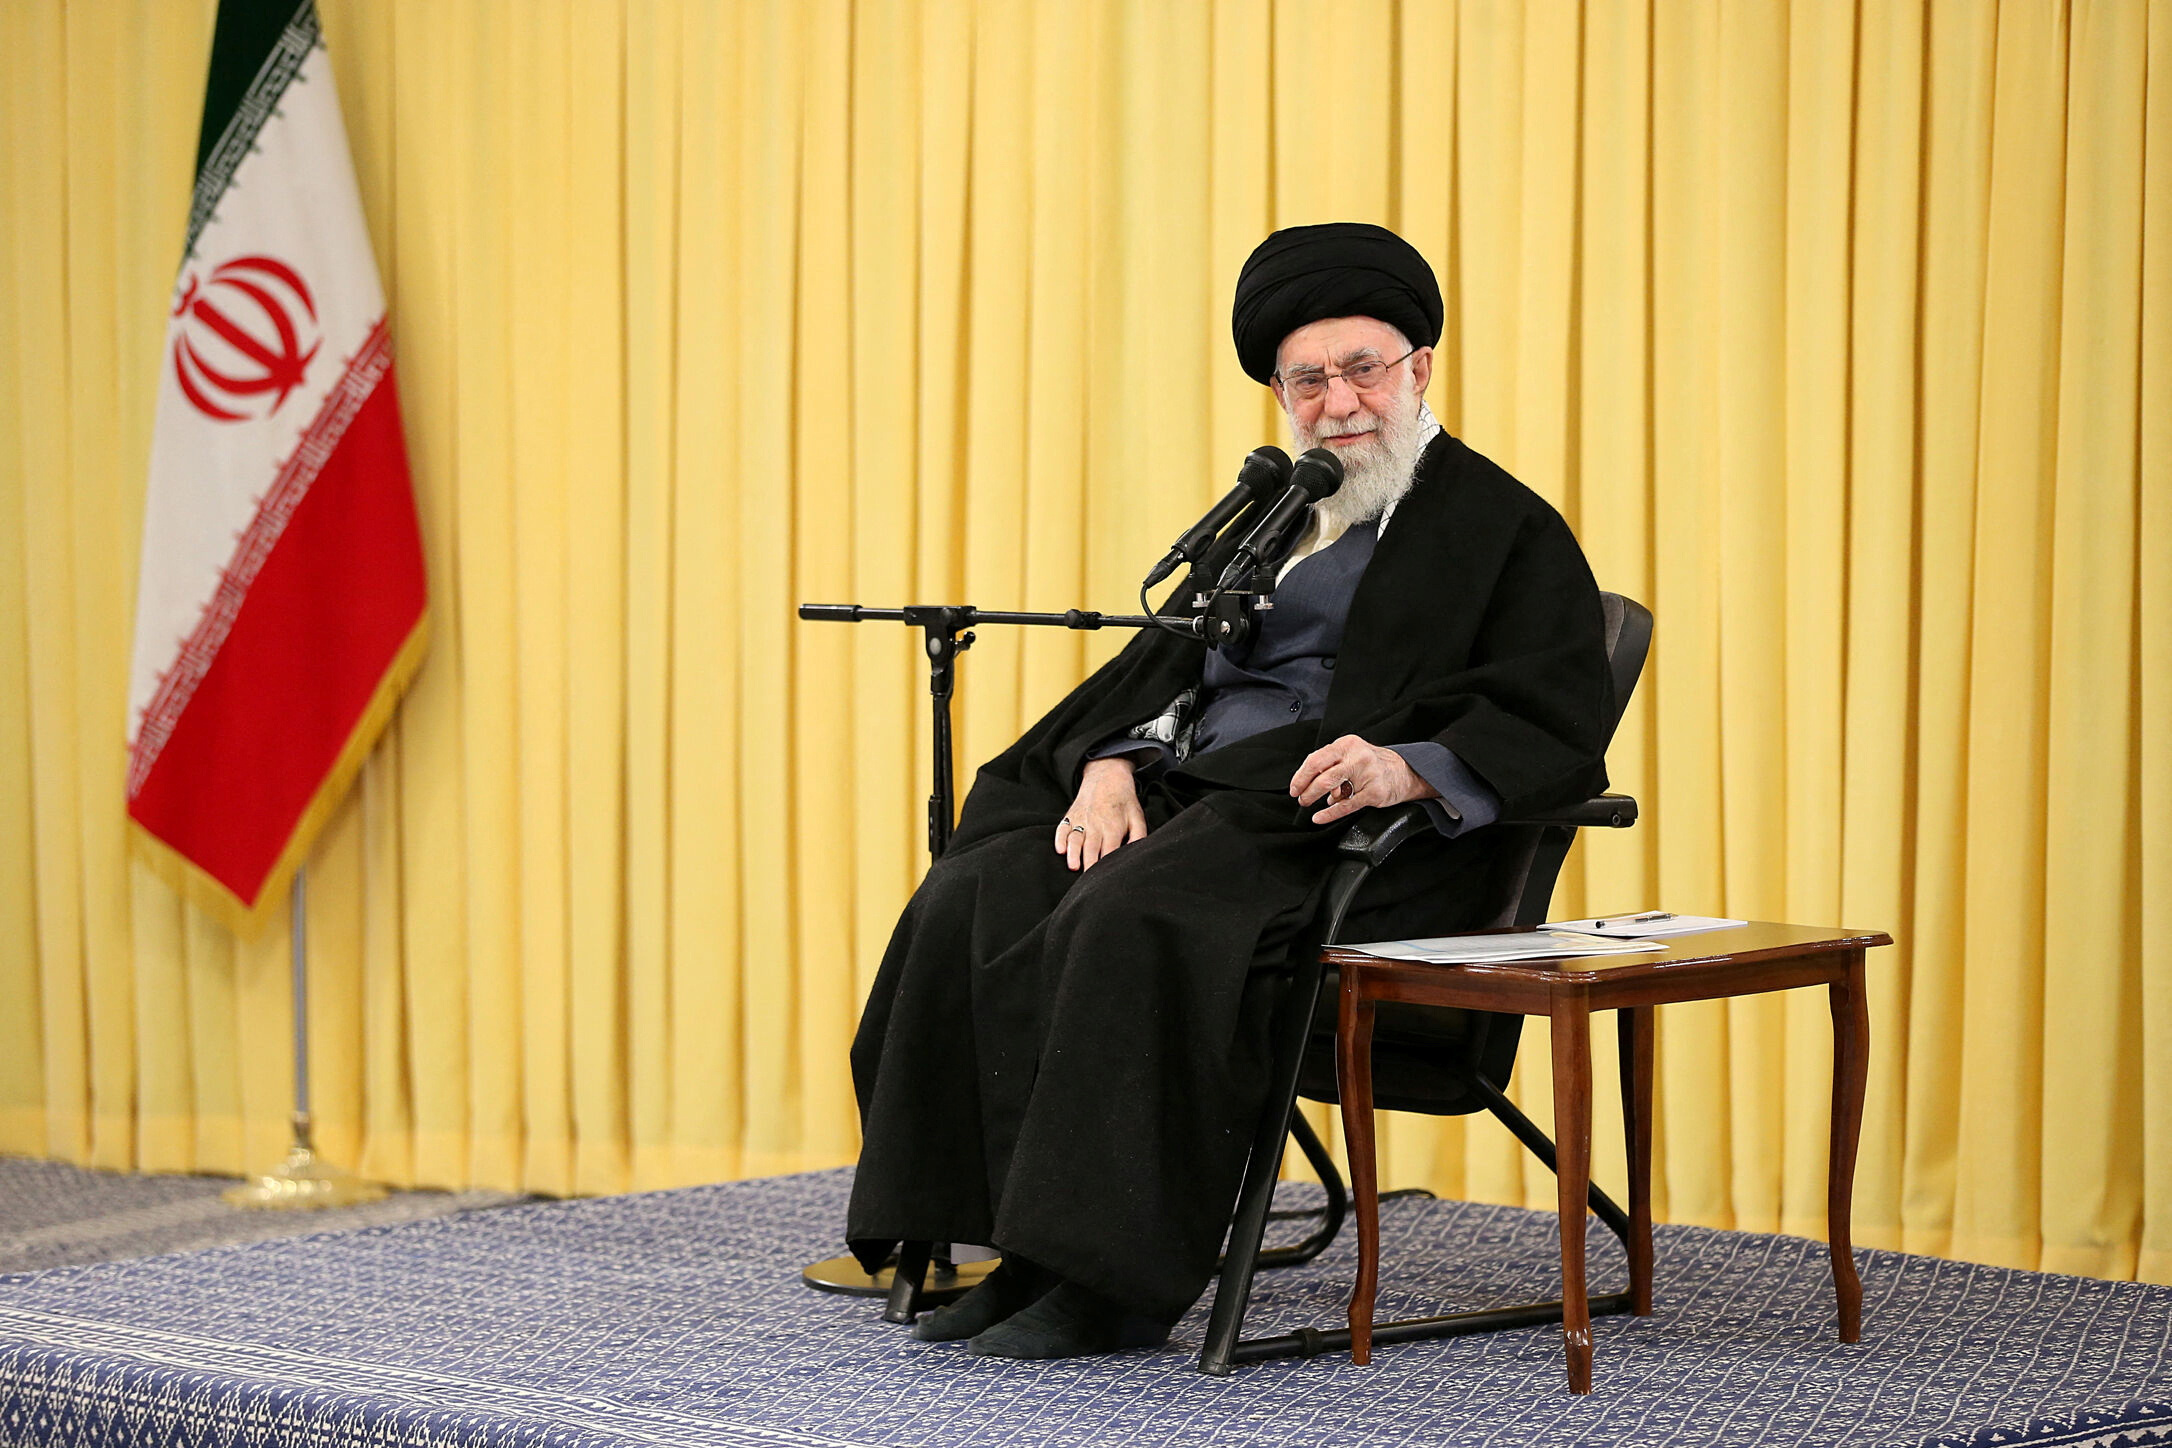 Iran's Supreme Leader Ayatollah Ali Khamenei prays during a meeting with a group of girls in Tehran